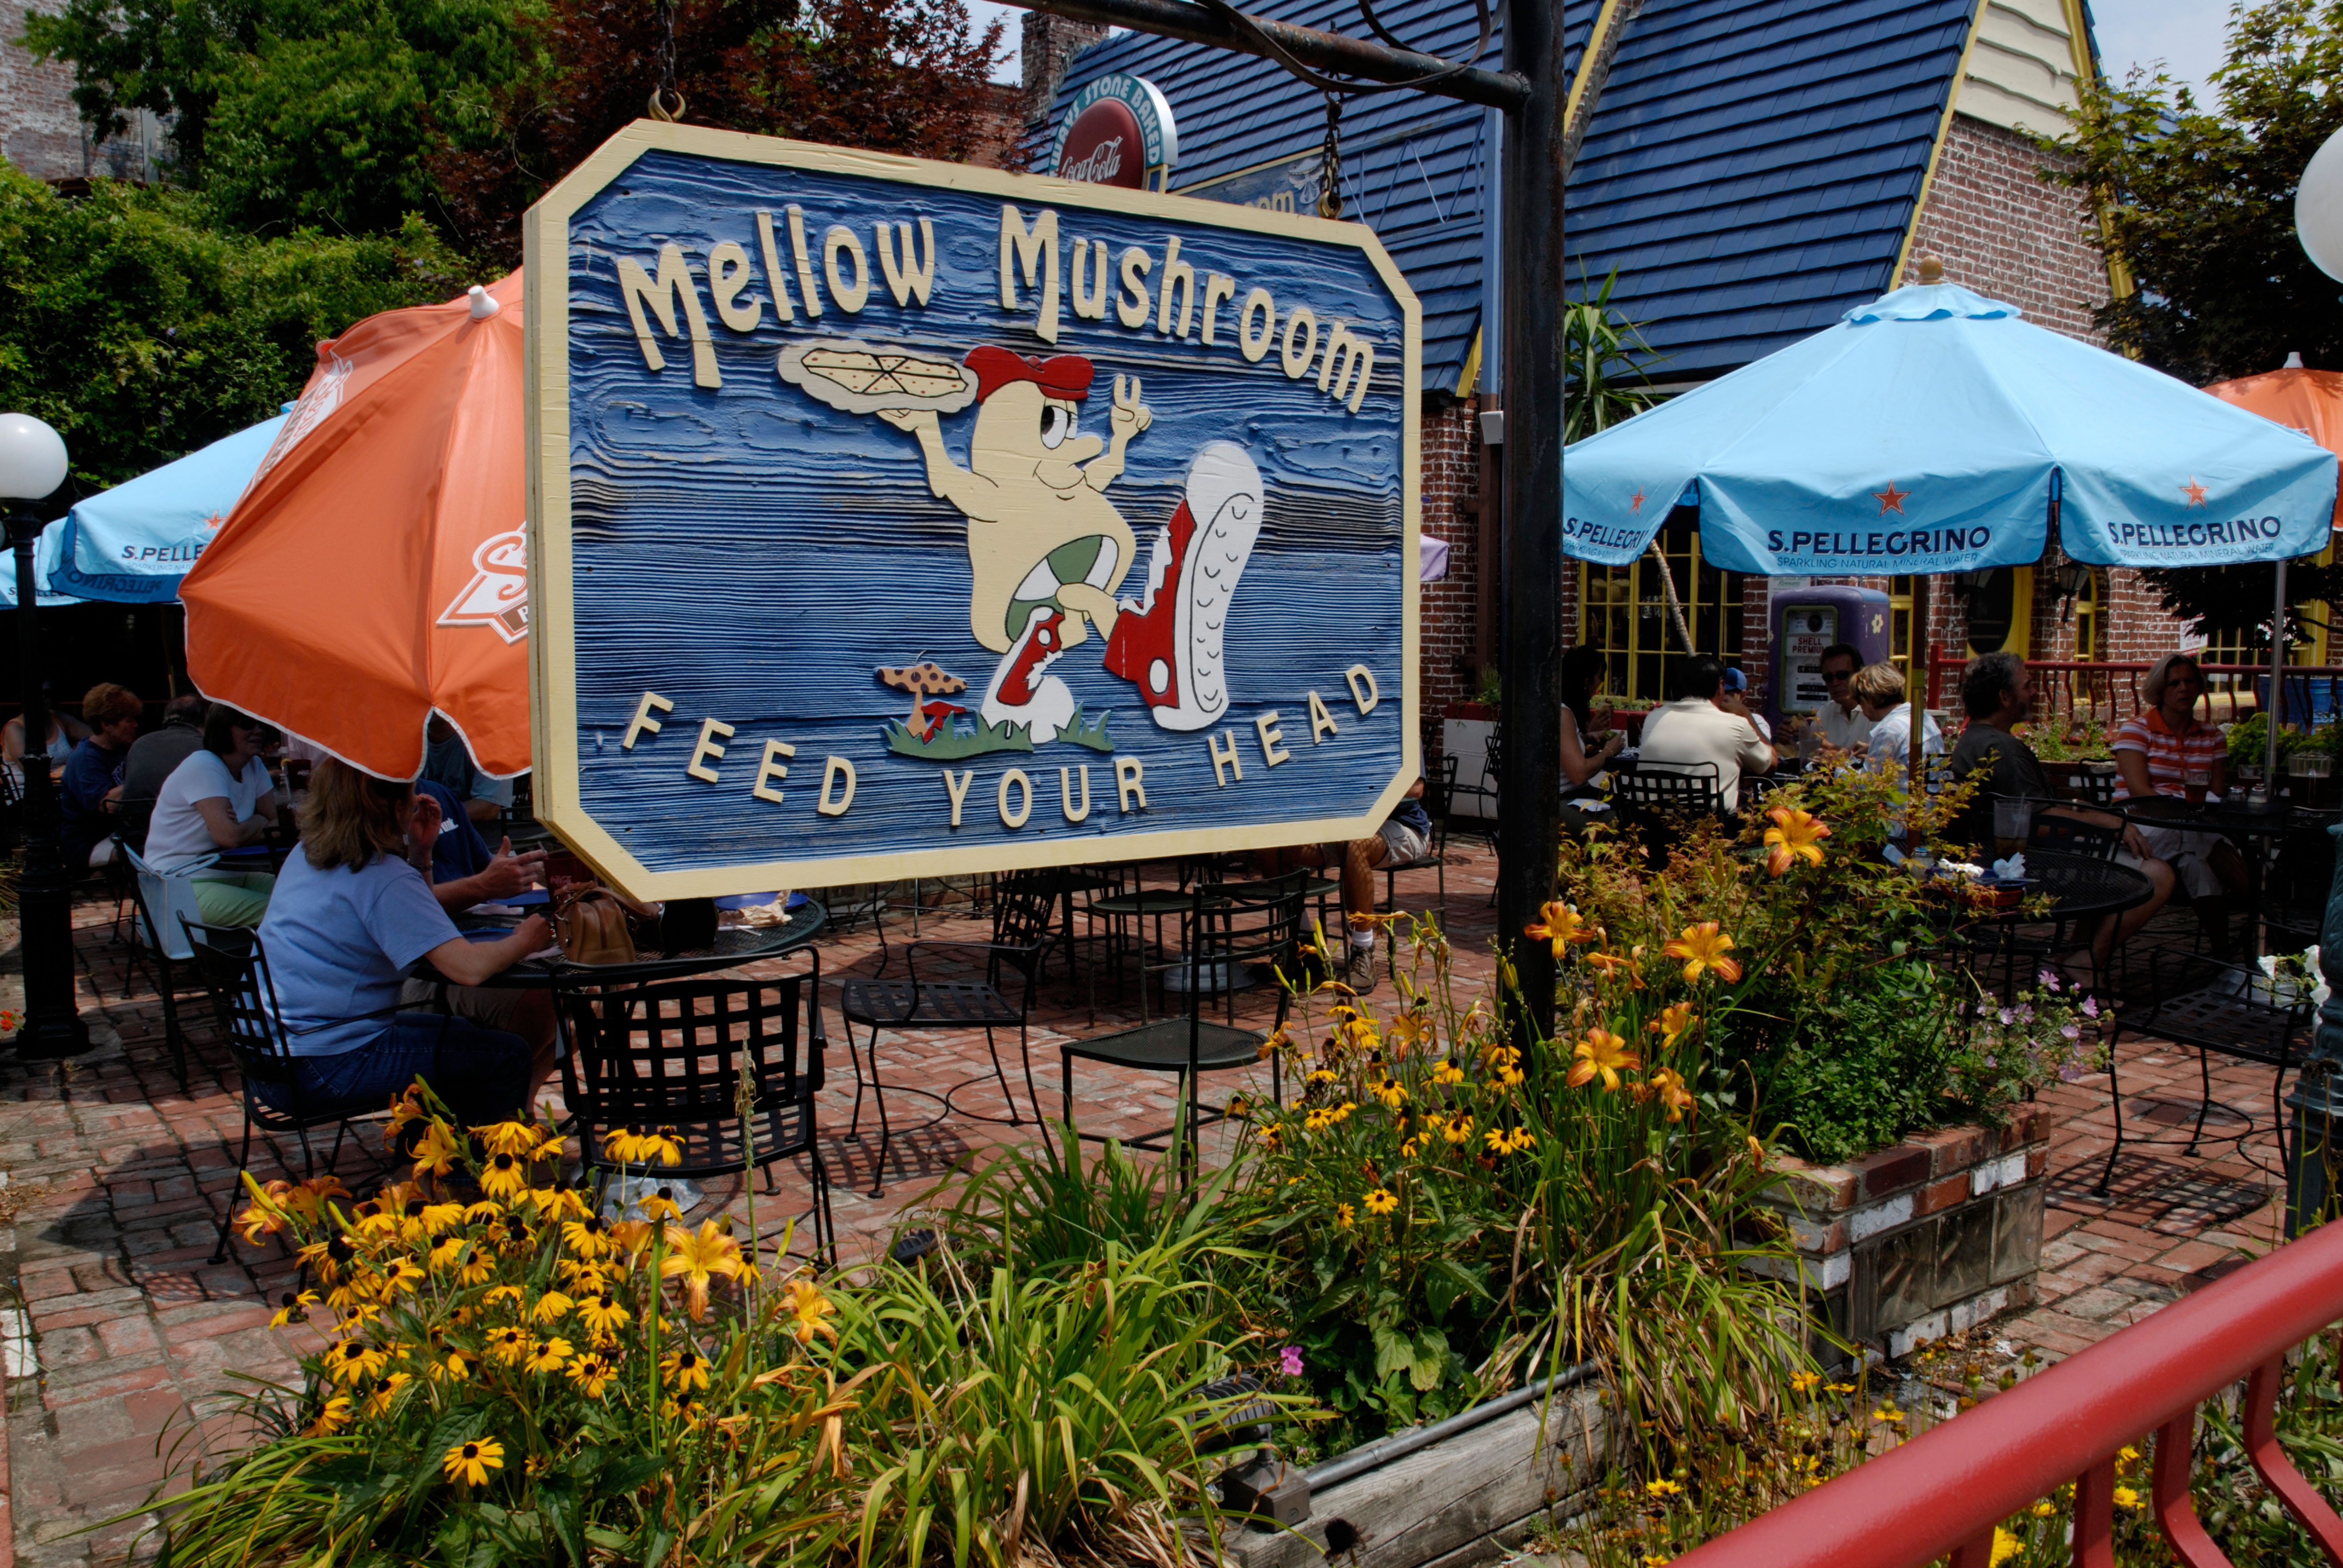 Mellow Mushroom pizza restaurant, a landmark establishment in Asheville, North Carolina